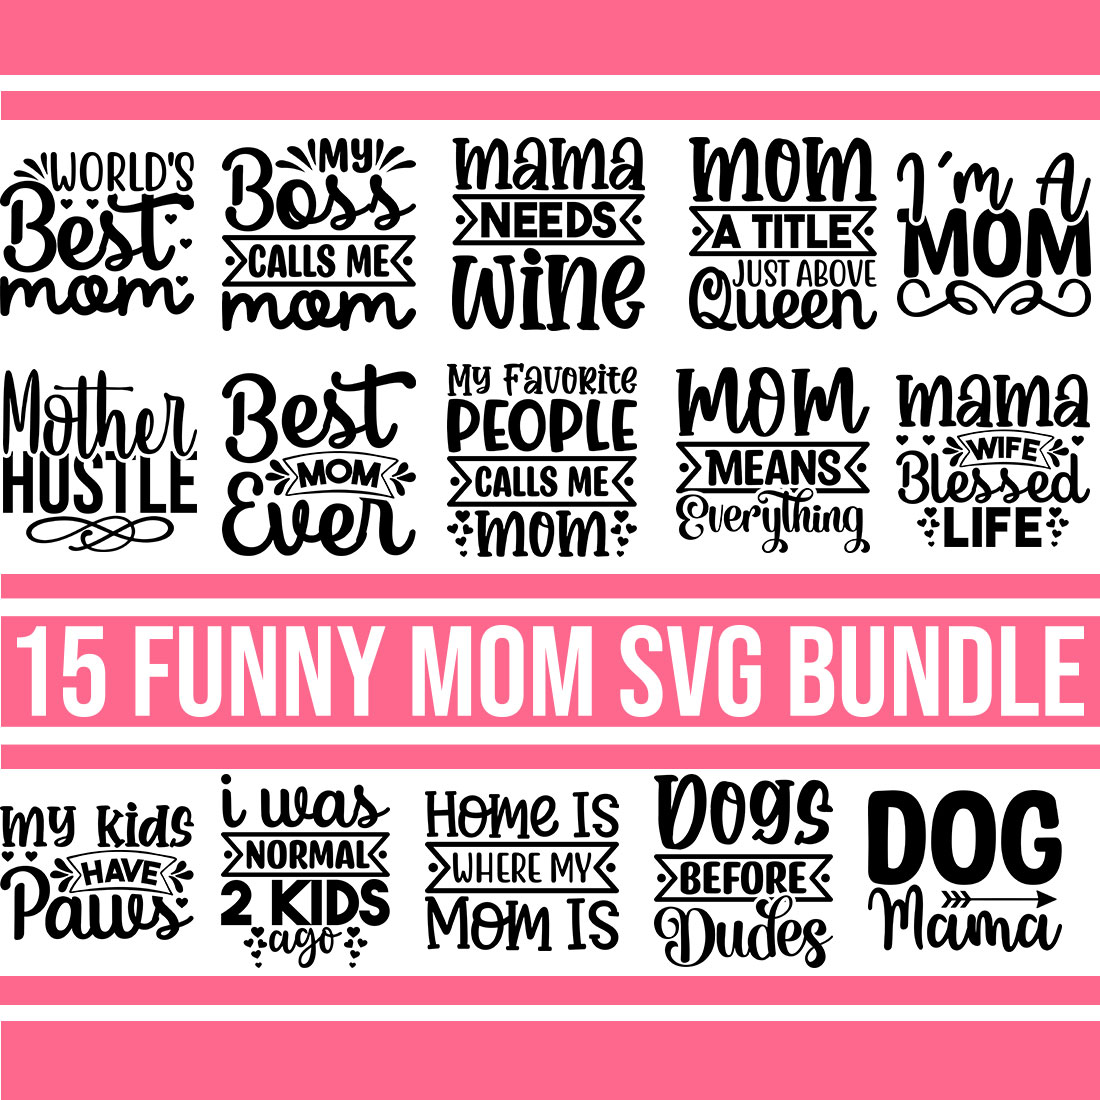 Funny Mom SVG Bundle preview image.